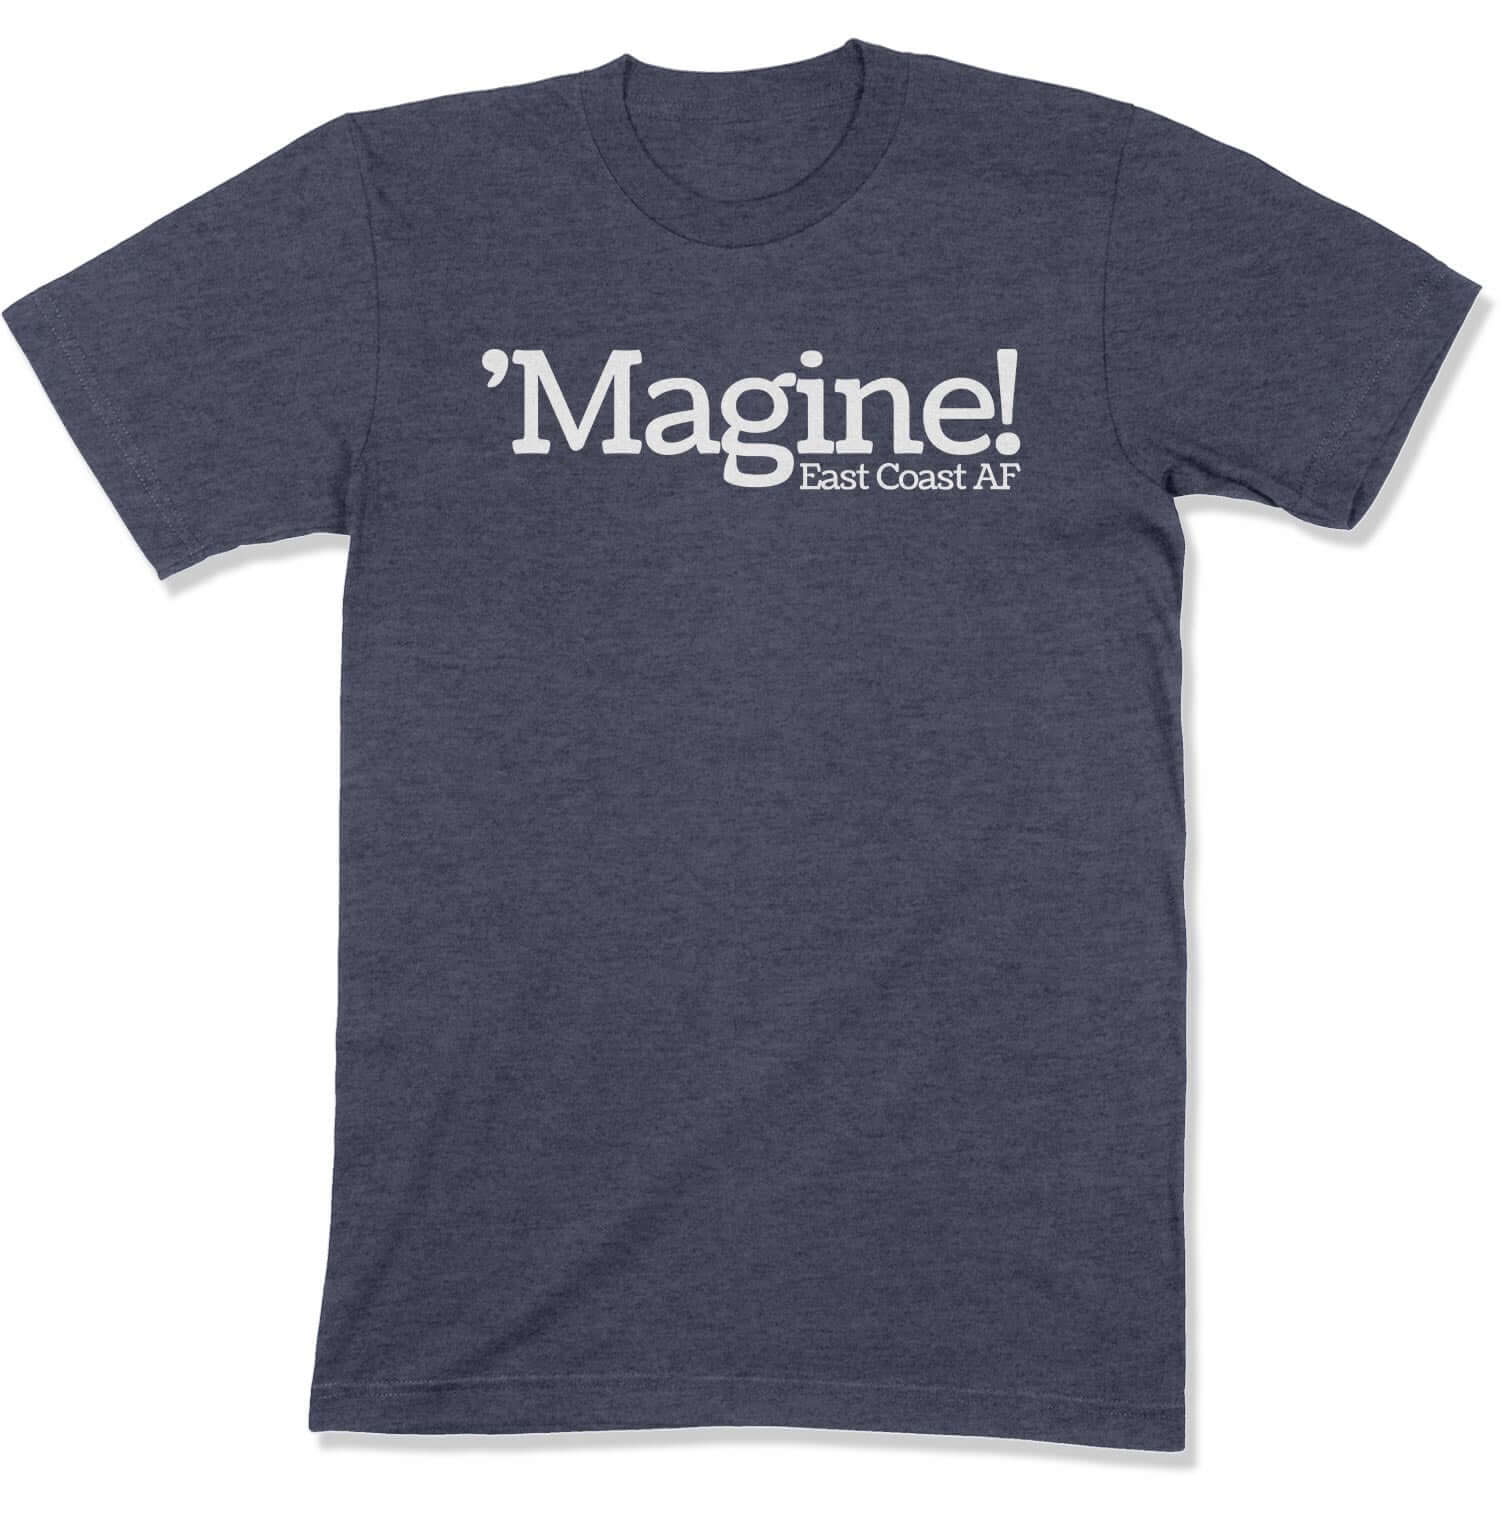 'Magine! Unisex T-Shirt in Color: Heather Navy - East Coast AF Apparel